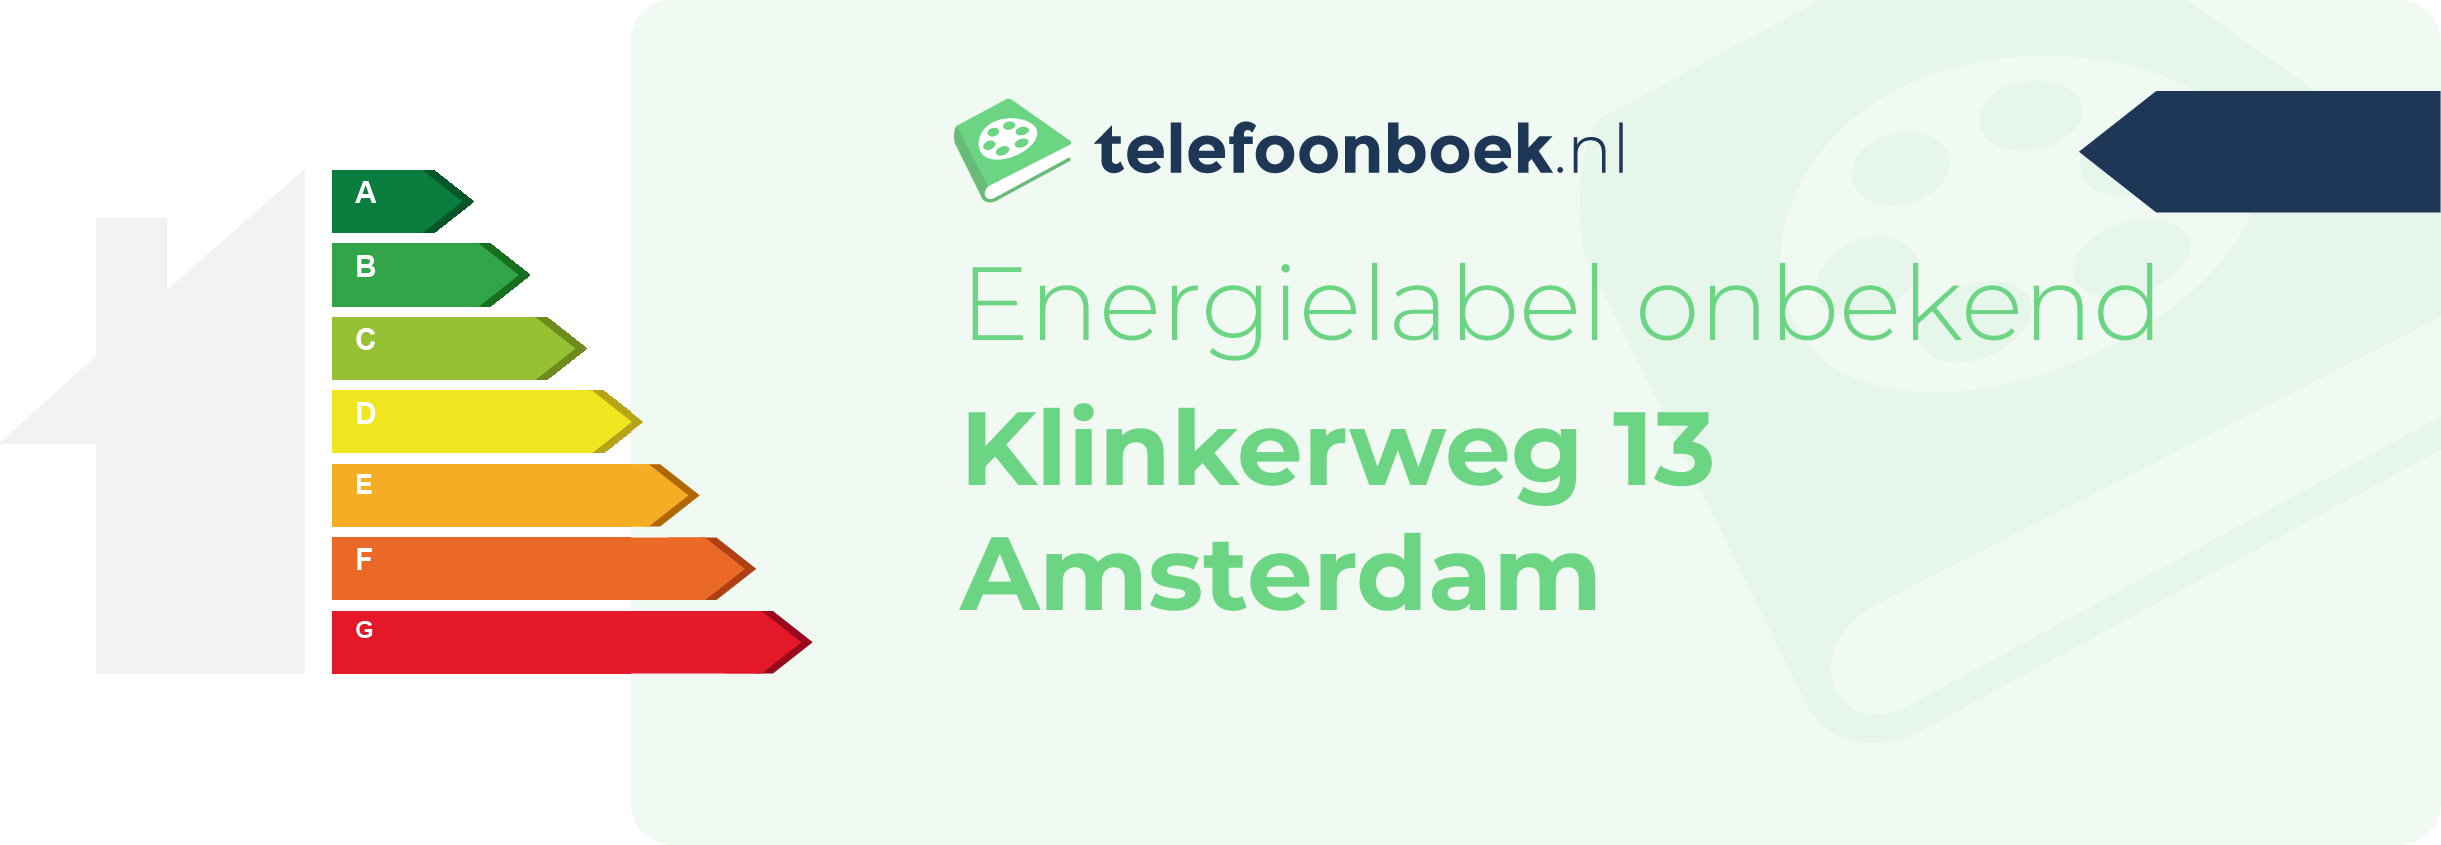 Energielabel Klinkerweg 13 Amsterdam